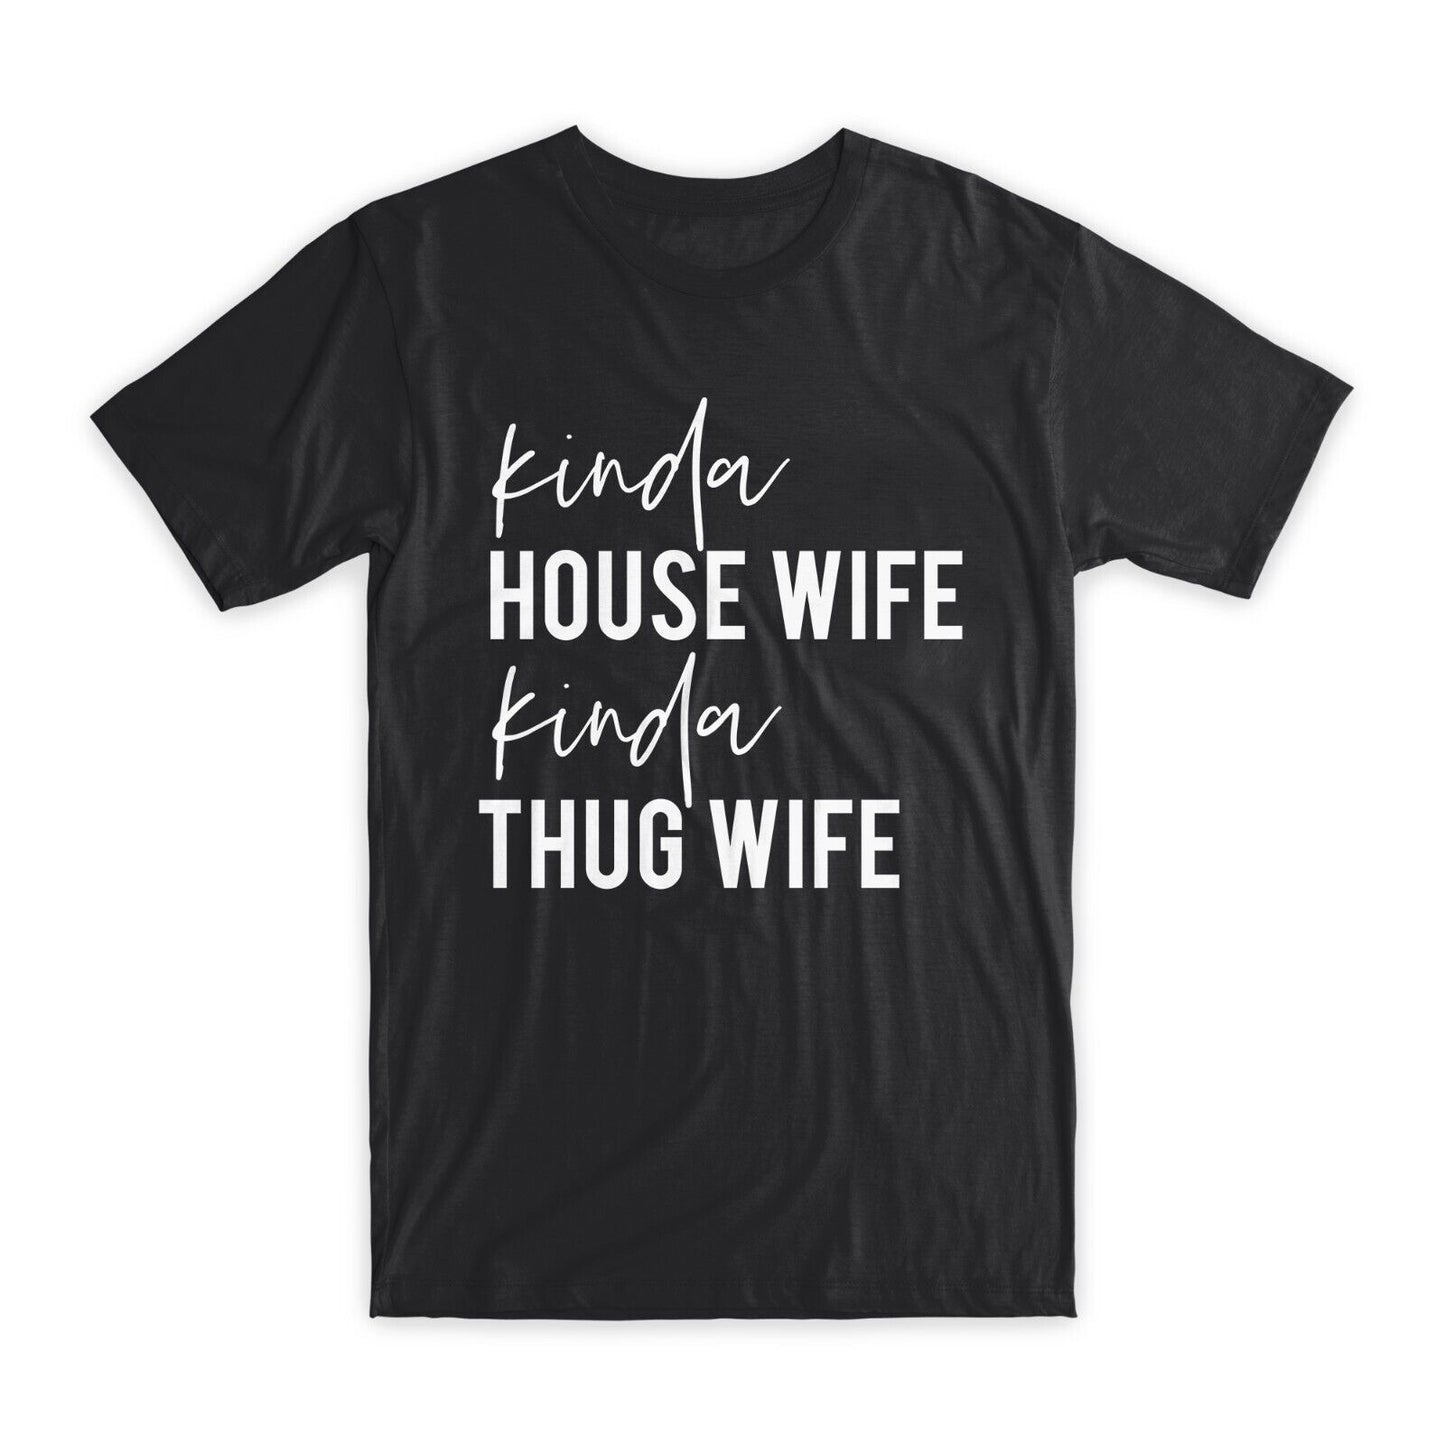 Kinda House Wife Kinda Thug Wife T-Shirt Premium Soft Cotton Funny Tees Gift NEW